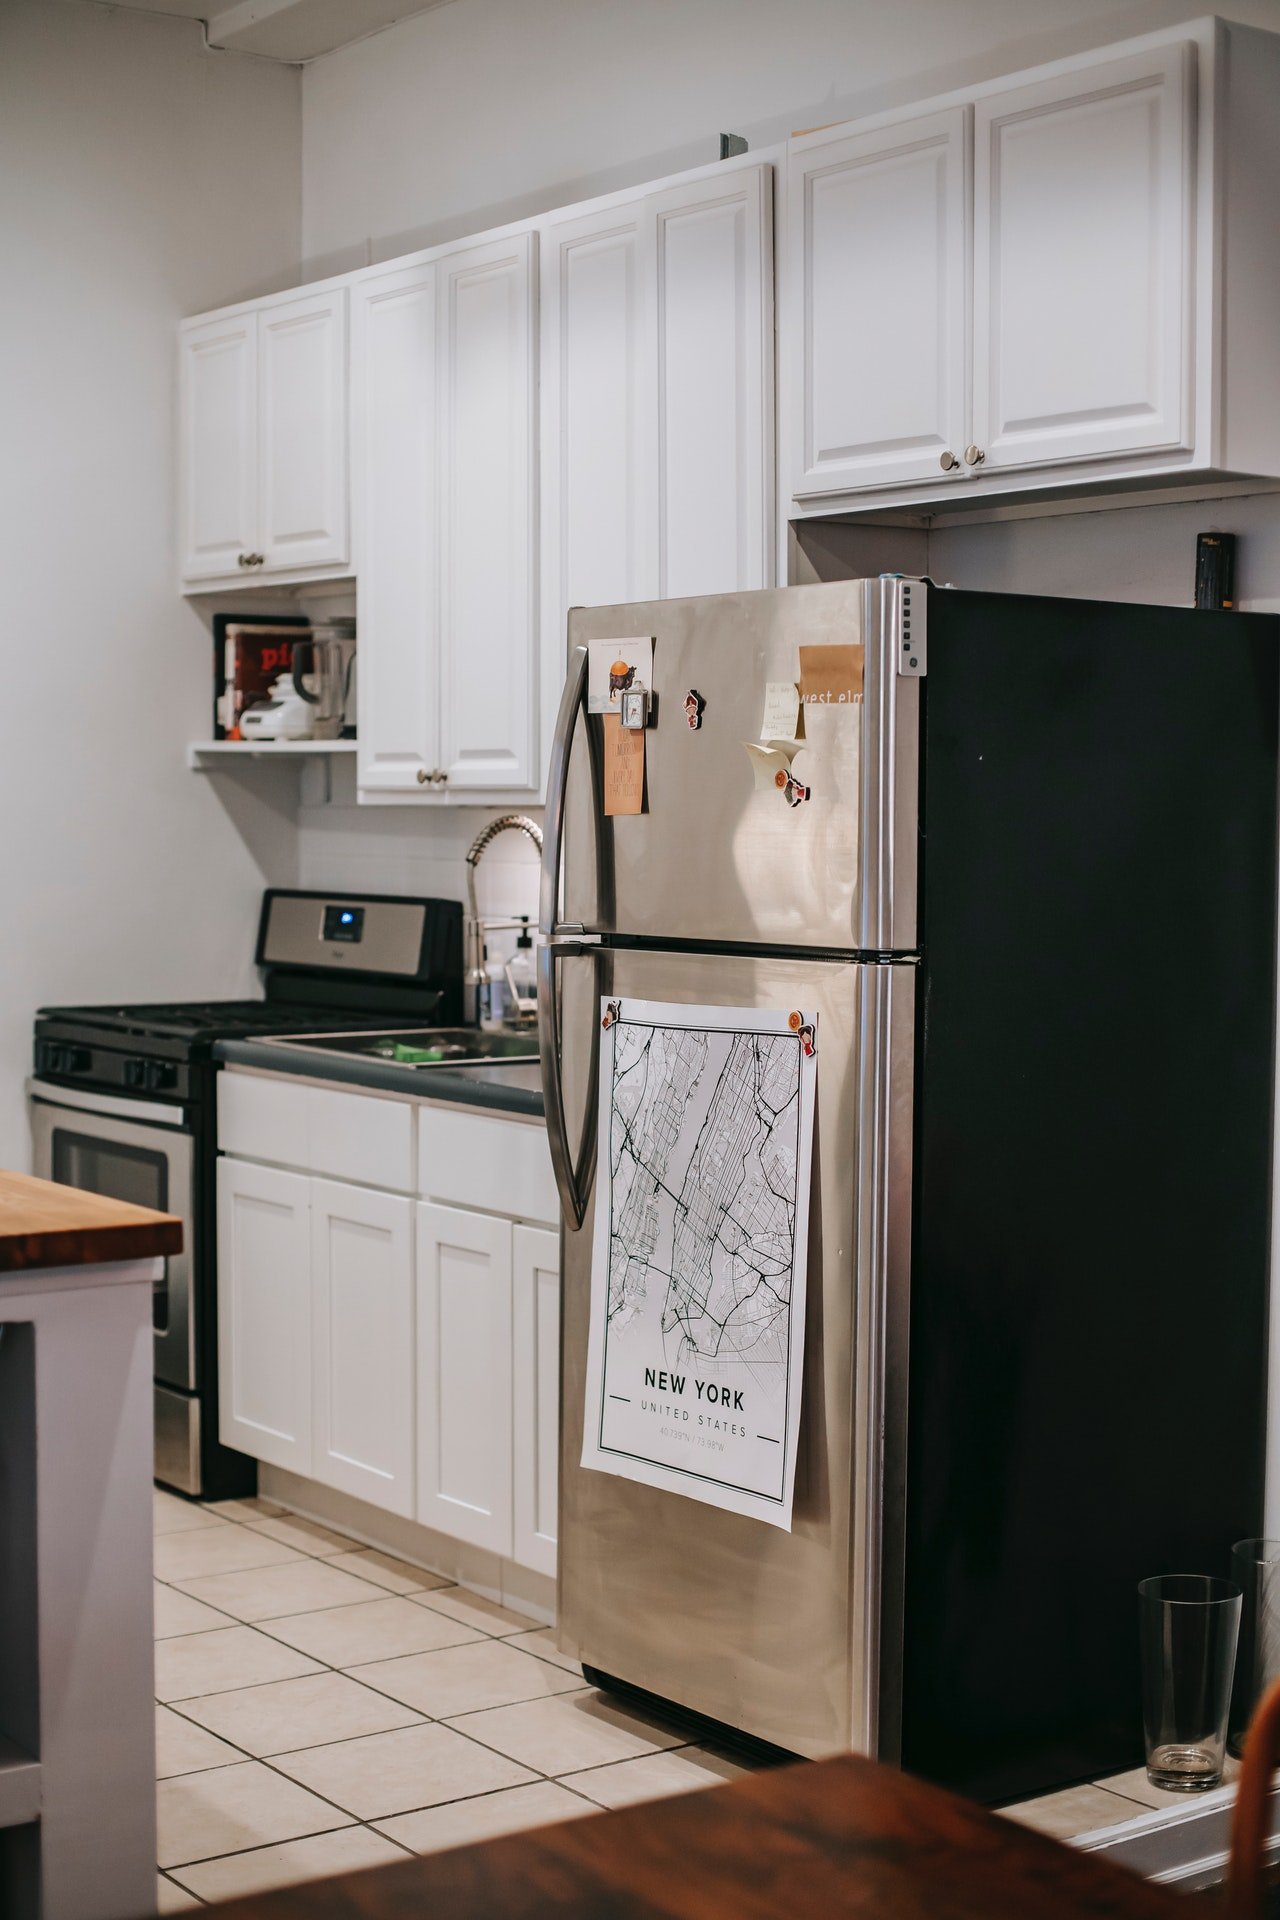 Área de la cocina. | Foto: Pexels